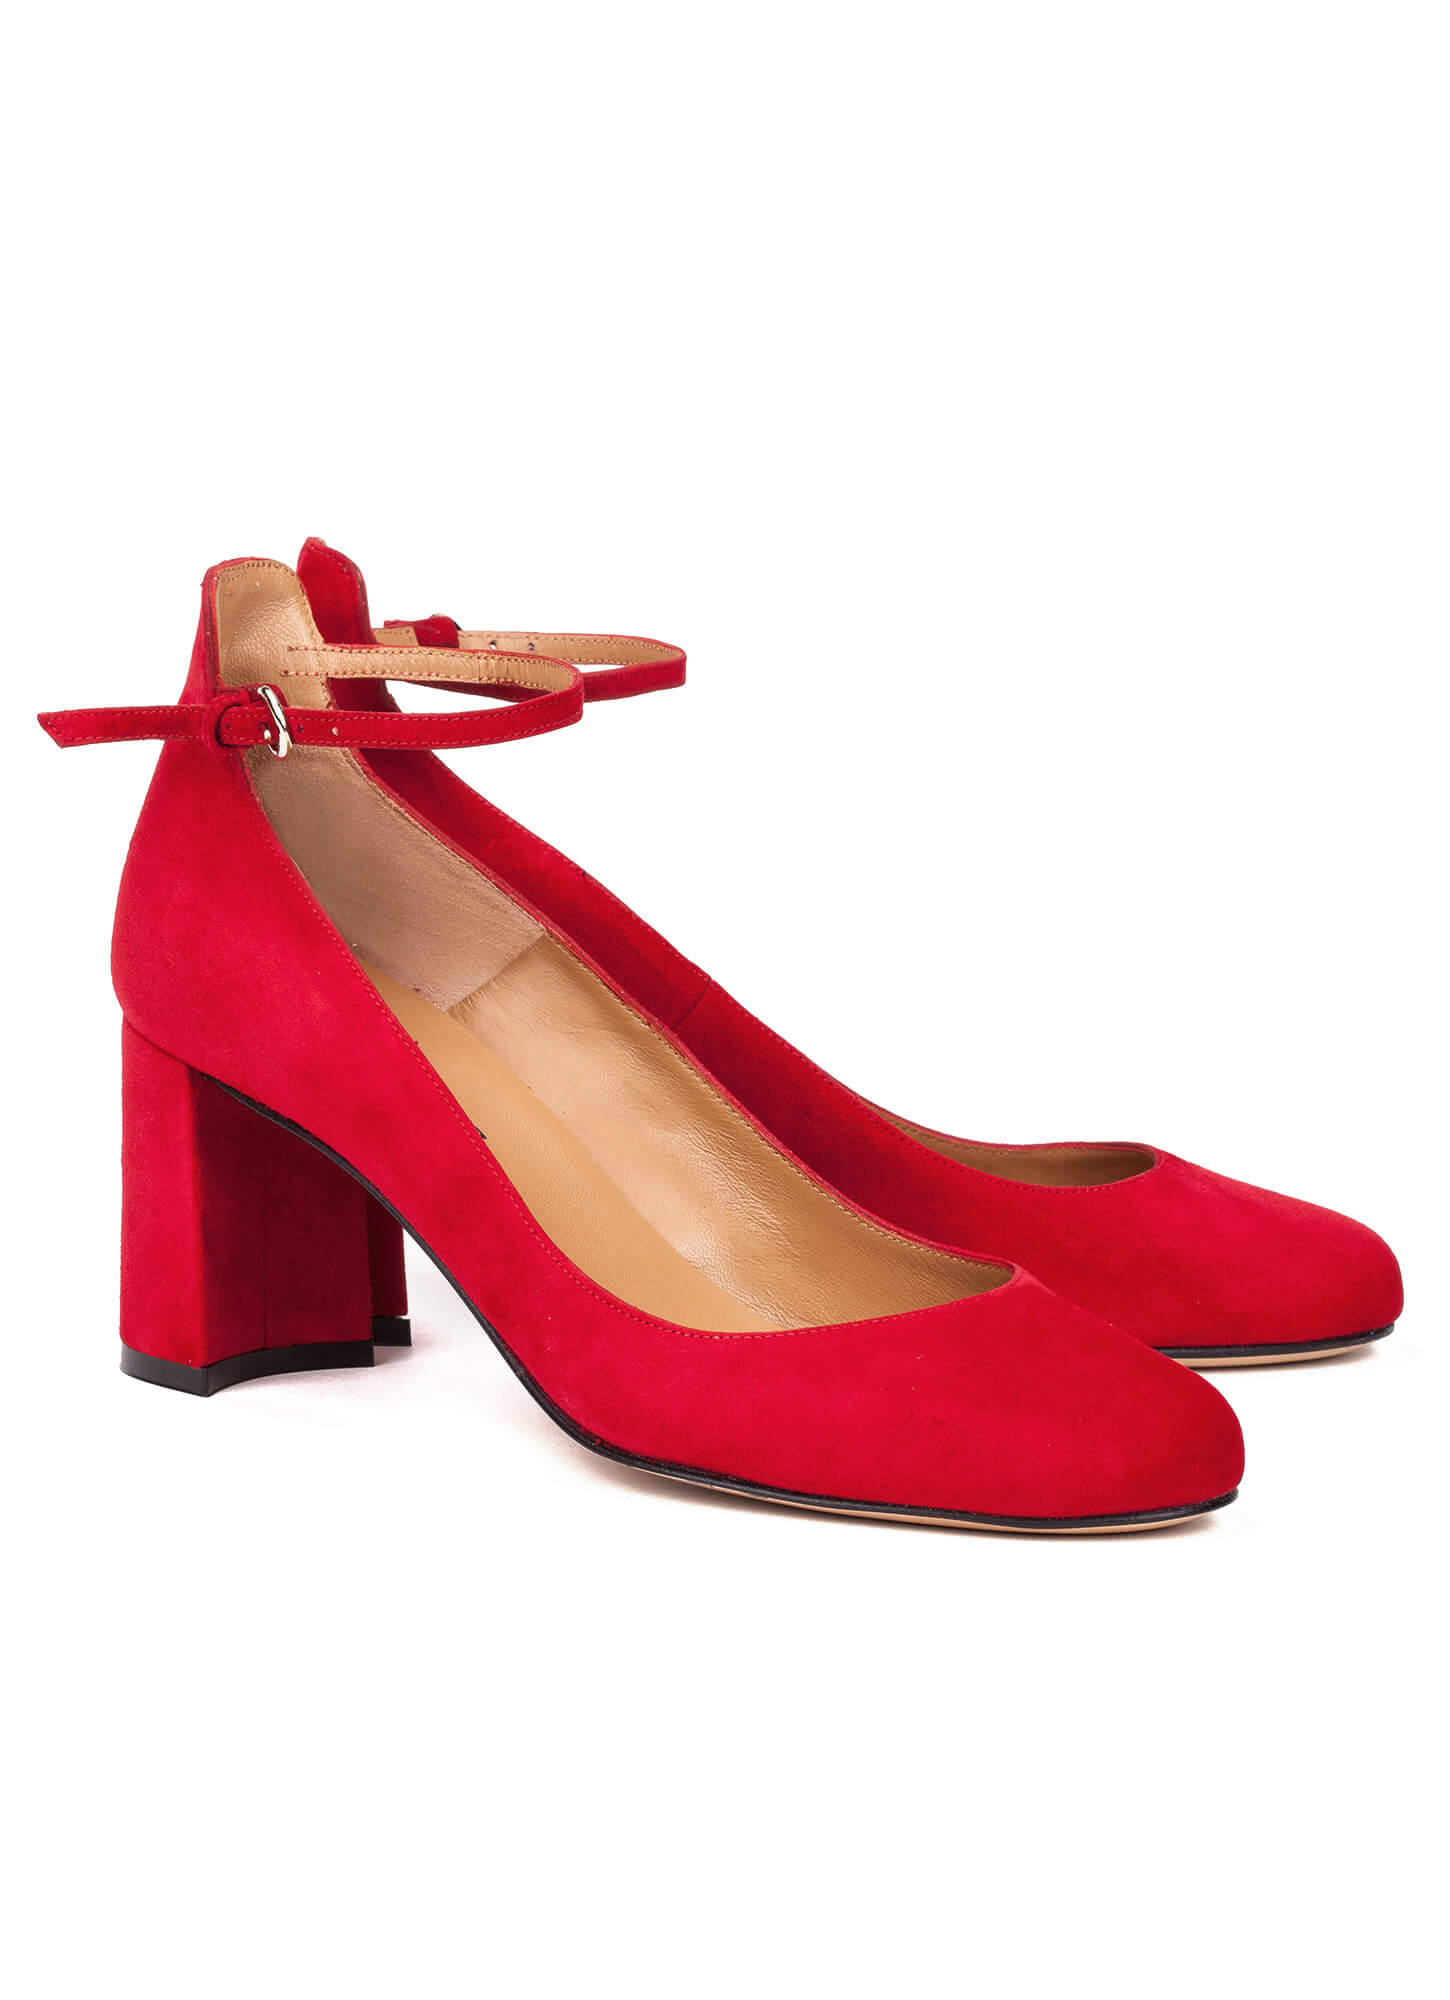 Mid heel shoes in red suede - online shoe store Pura Lopez . PURA LOPEZ